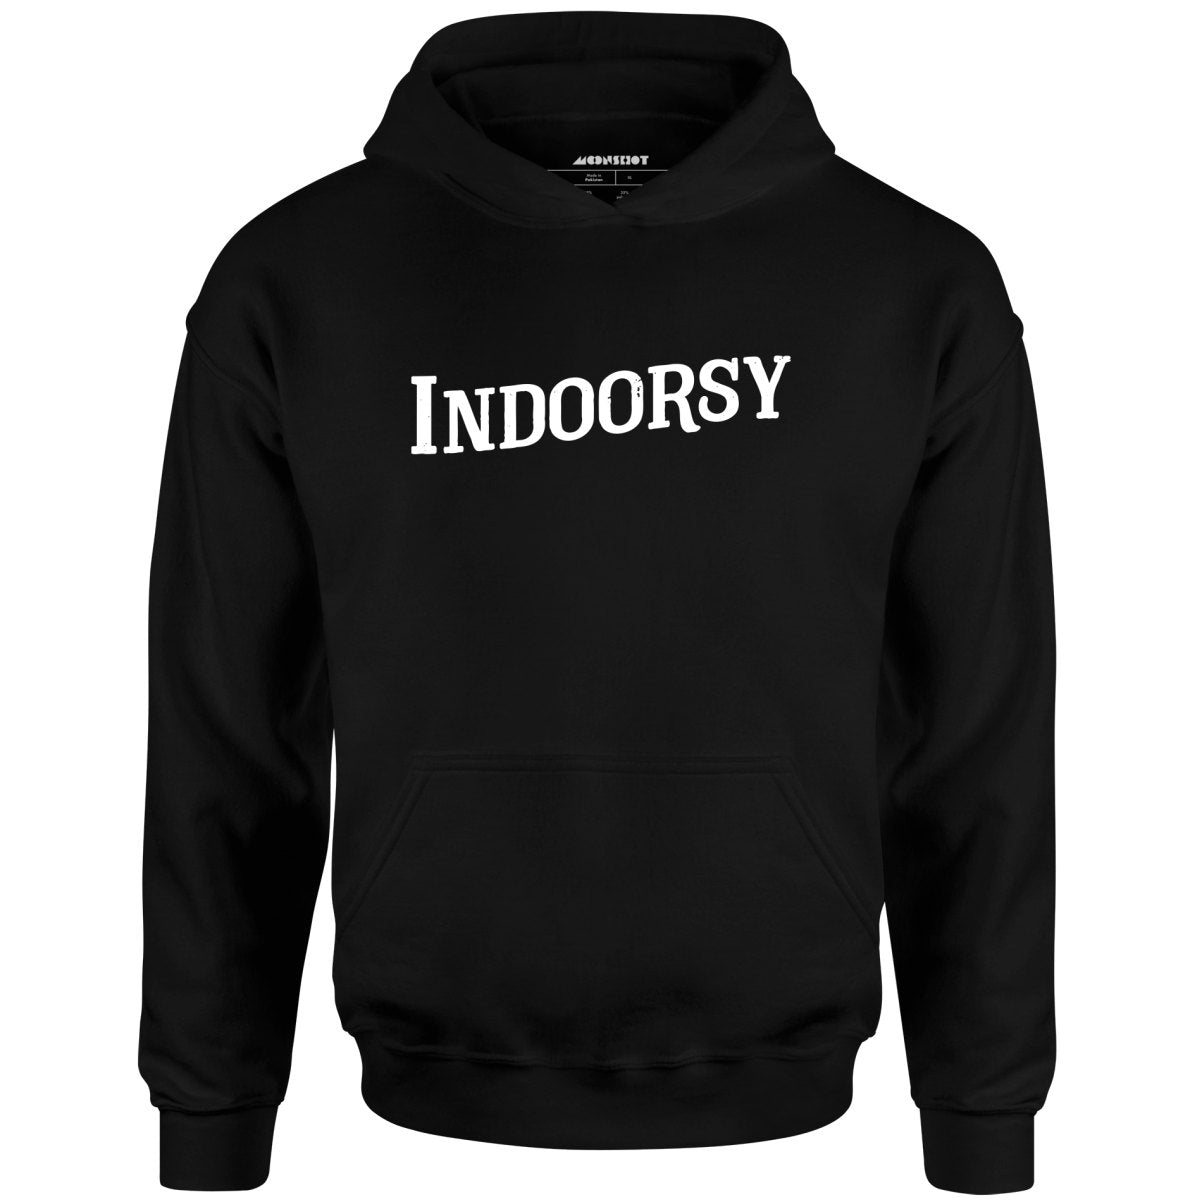 Indoorsy - Unisex Hoodie